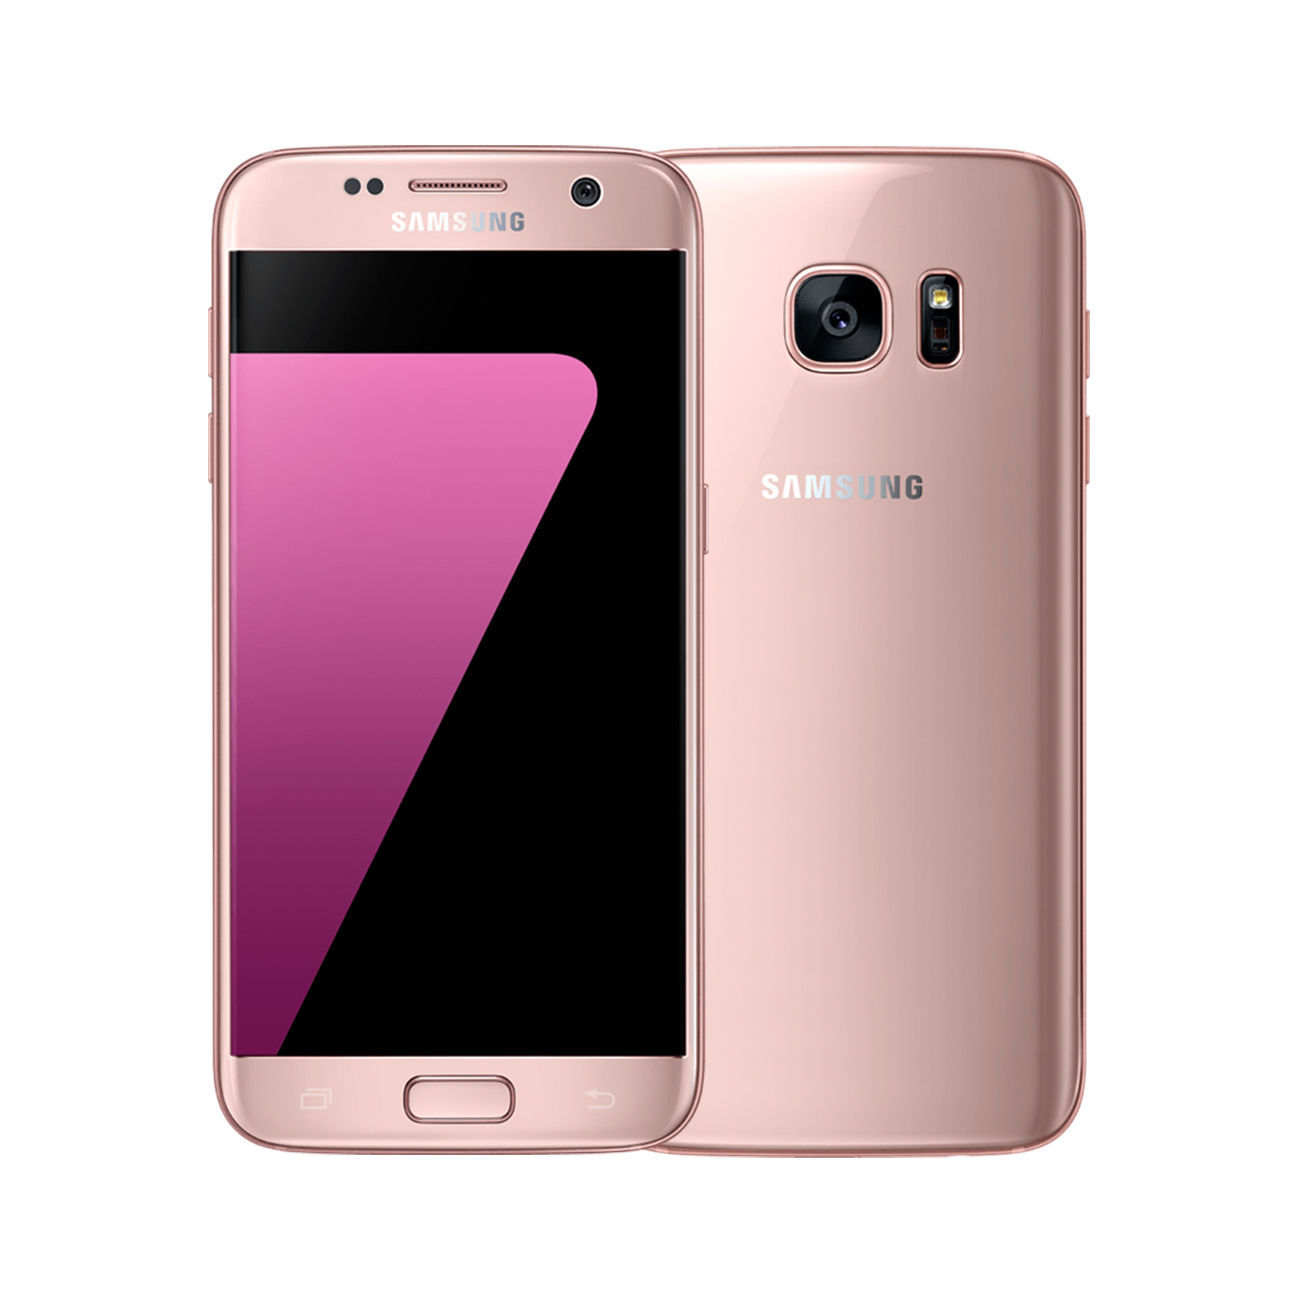 Samsung Galaxy S7 G930 32GB 64GB Black Gold Silver White Pink Slightly Imperfect